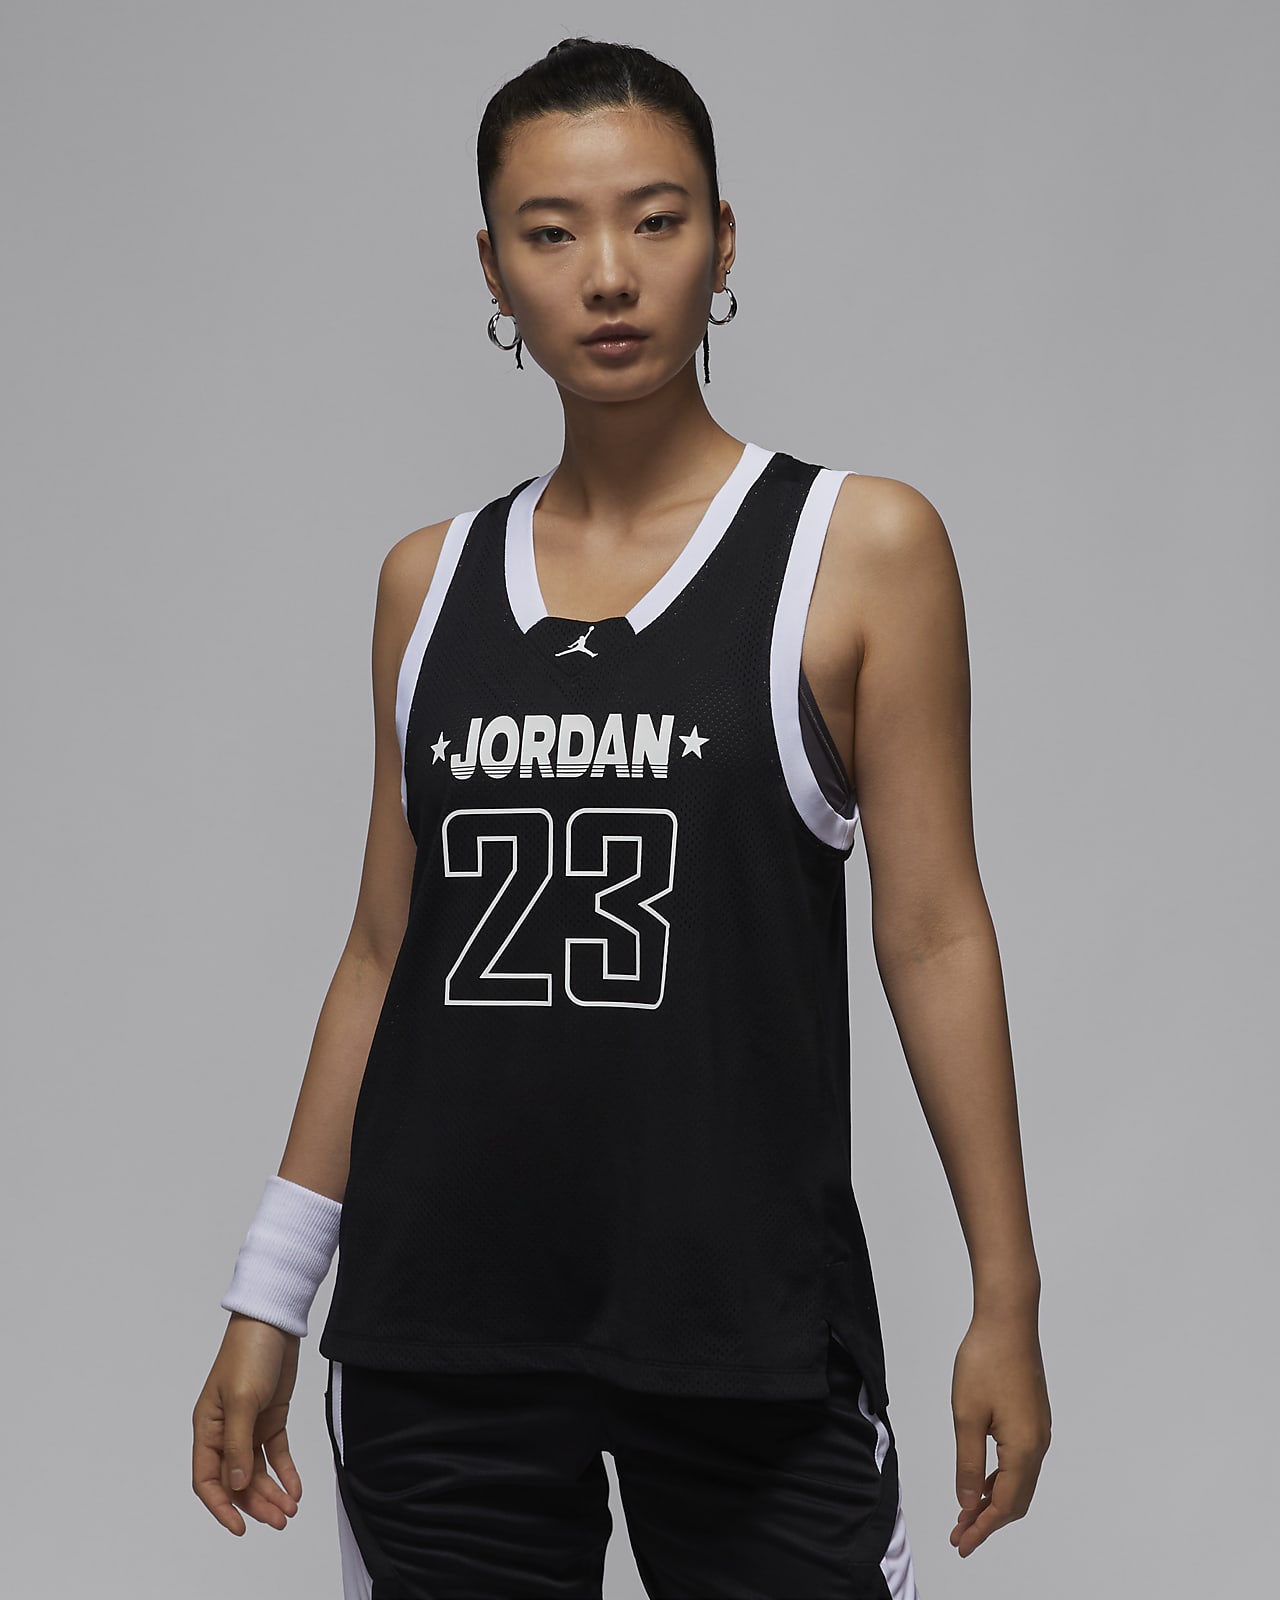 Jordan 23 Jersey 女子背心